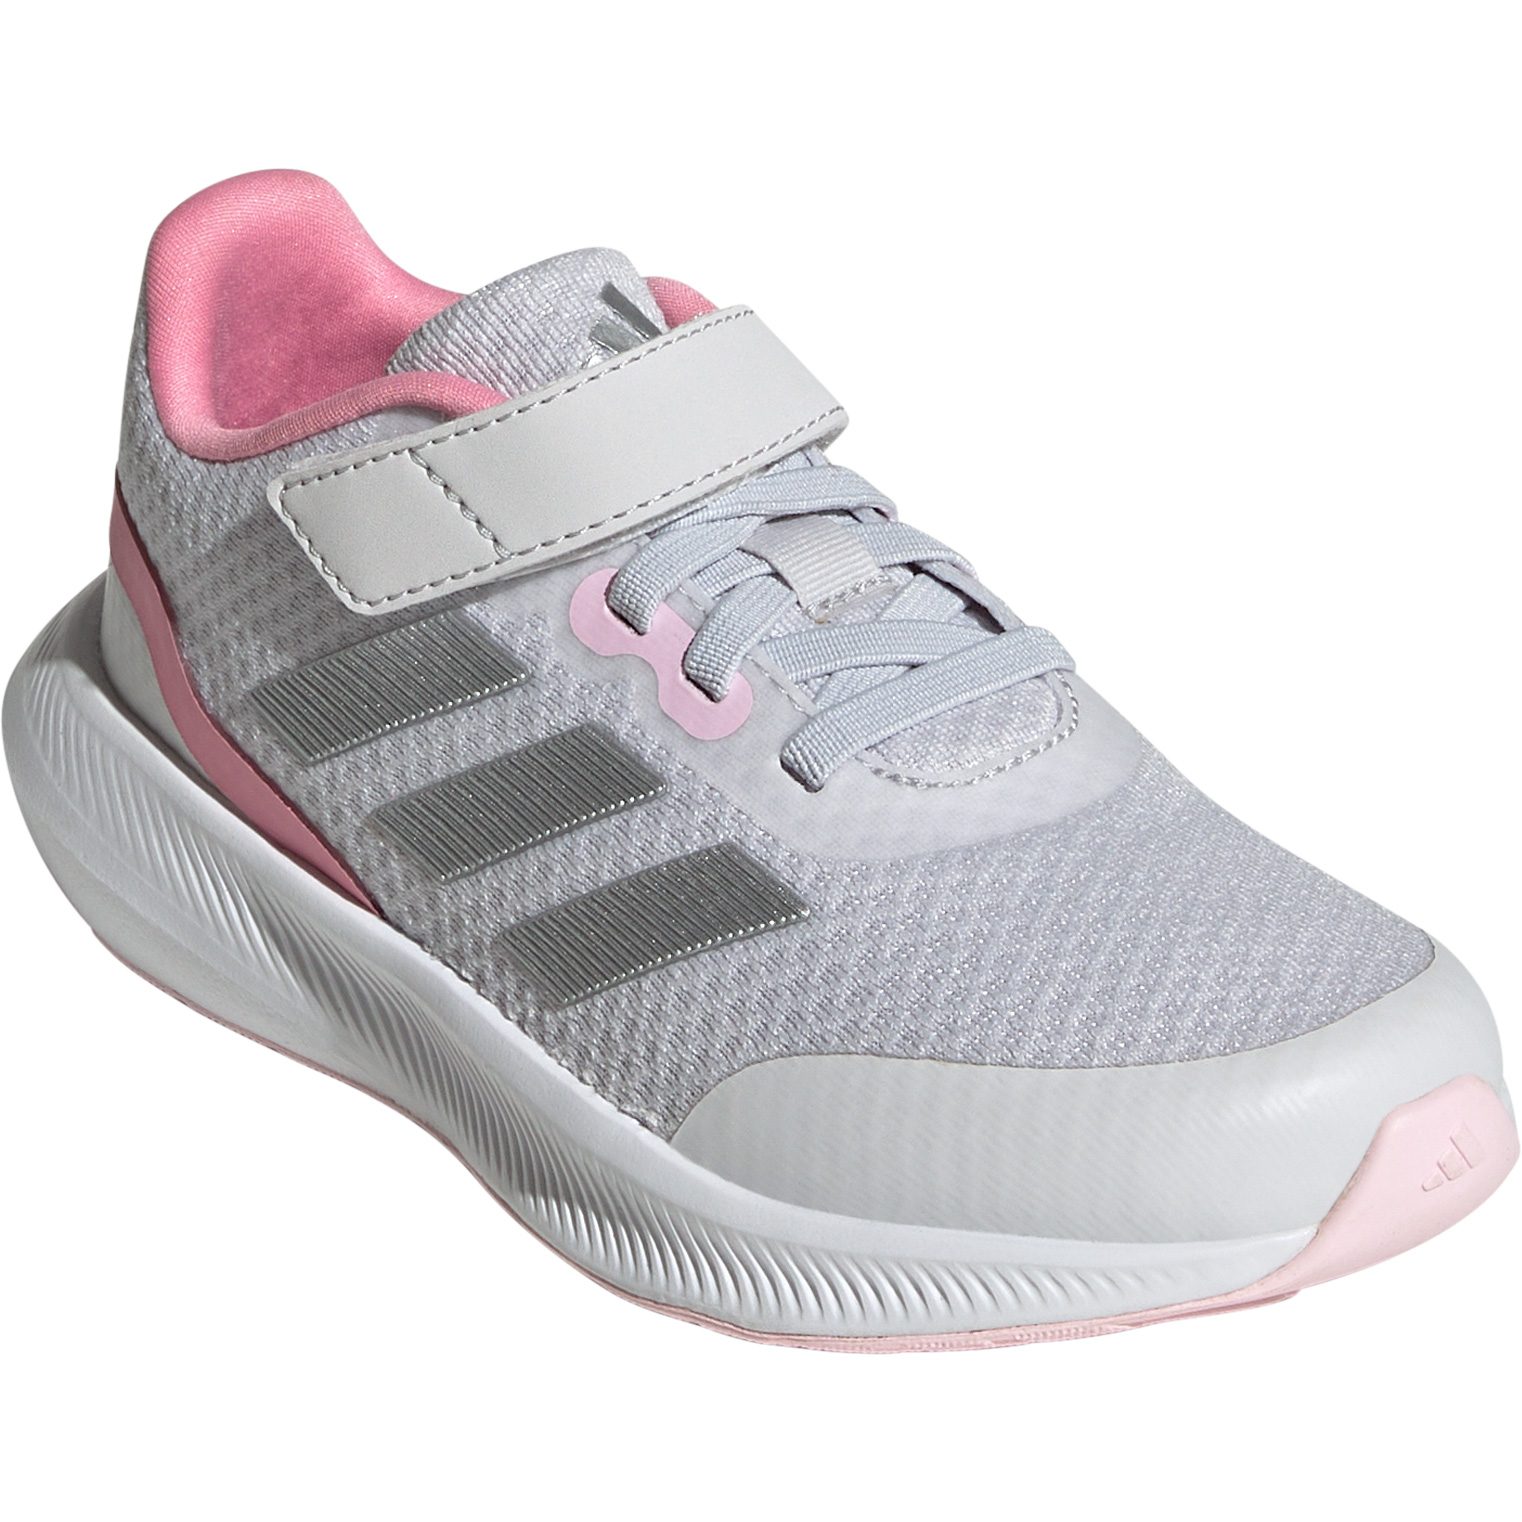 adidas - RunFalcon Elastic at 3.0 dash Strap grey Top Bittl Shoes Running Sport Kids Shop Lace